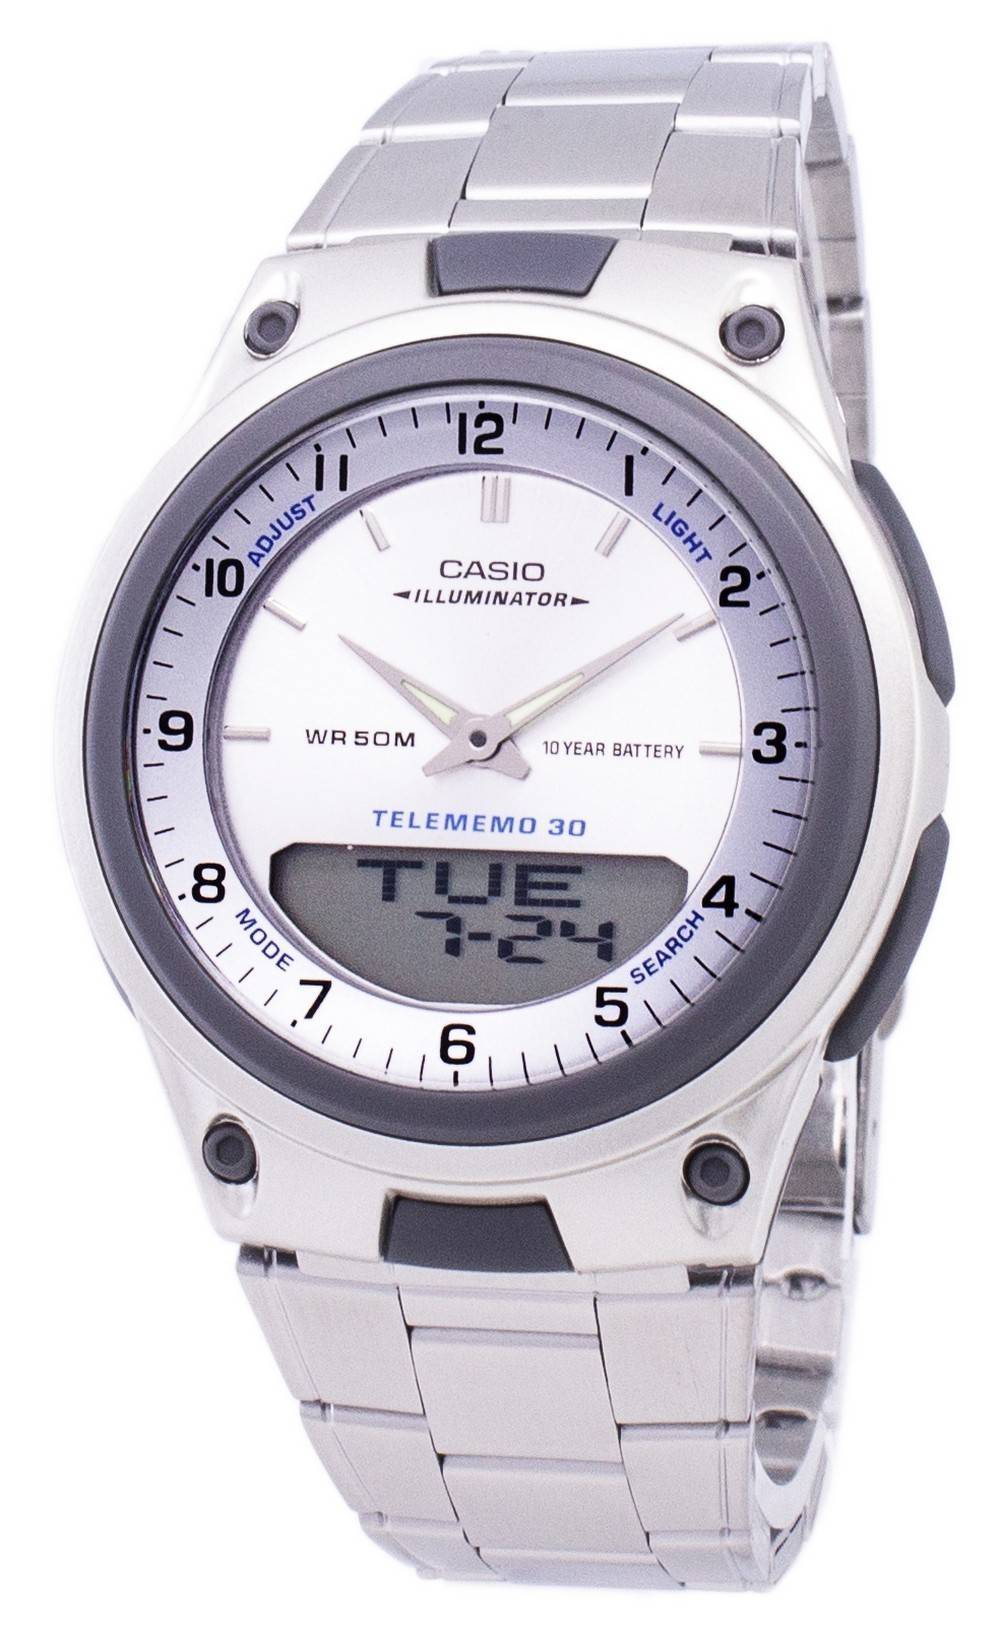 Khám phá đồng hồ Casio AW-80-7AVDF